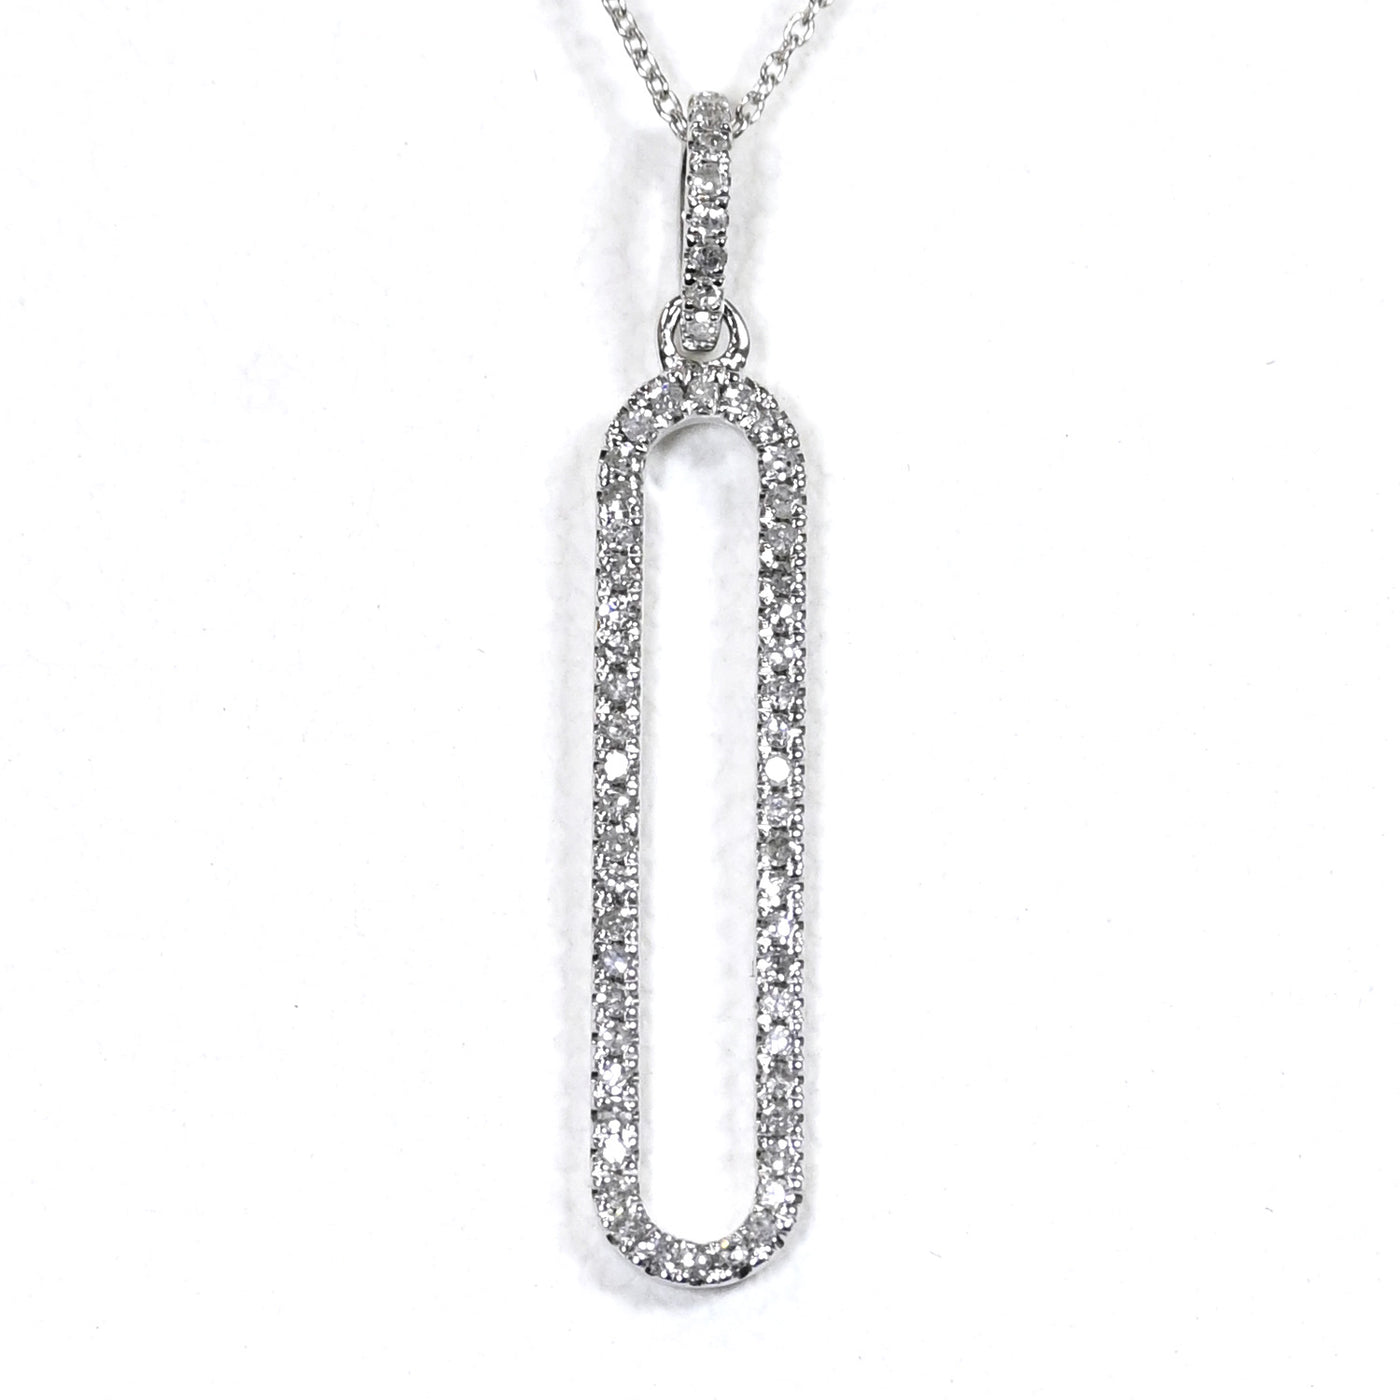 Quality Jewelry Design 14k Yellow Gold Diamond Drop Pendant Necklace – PD4-15950W